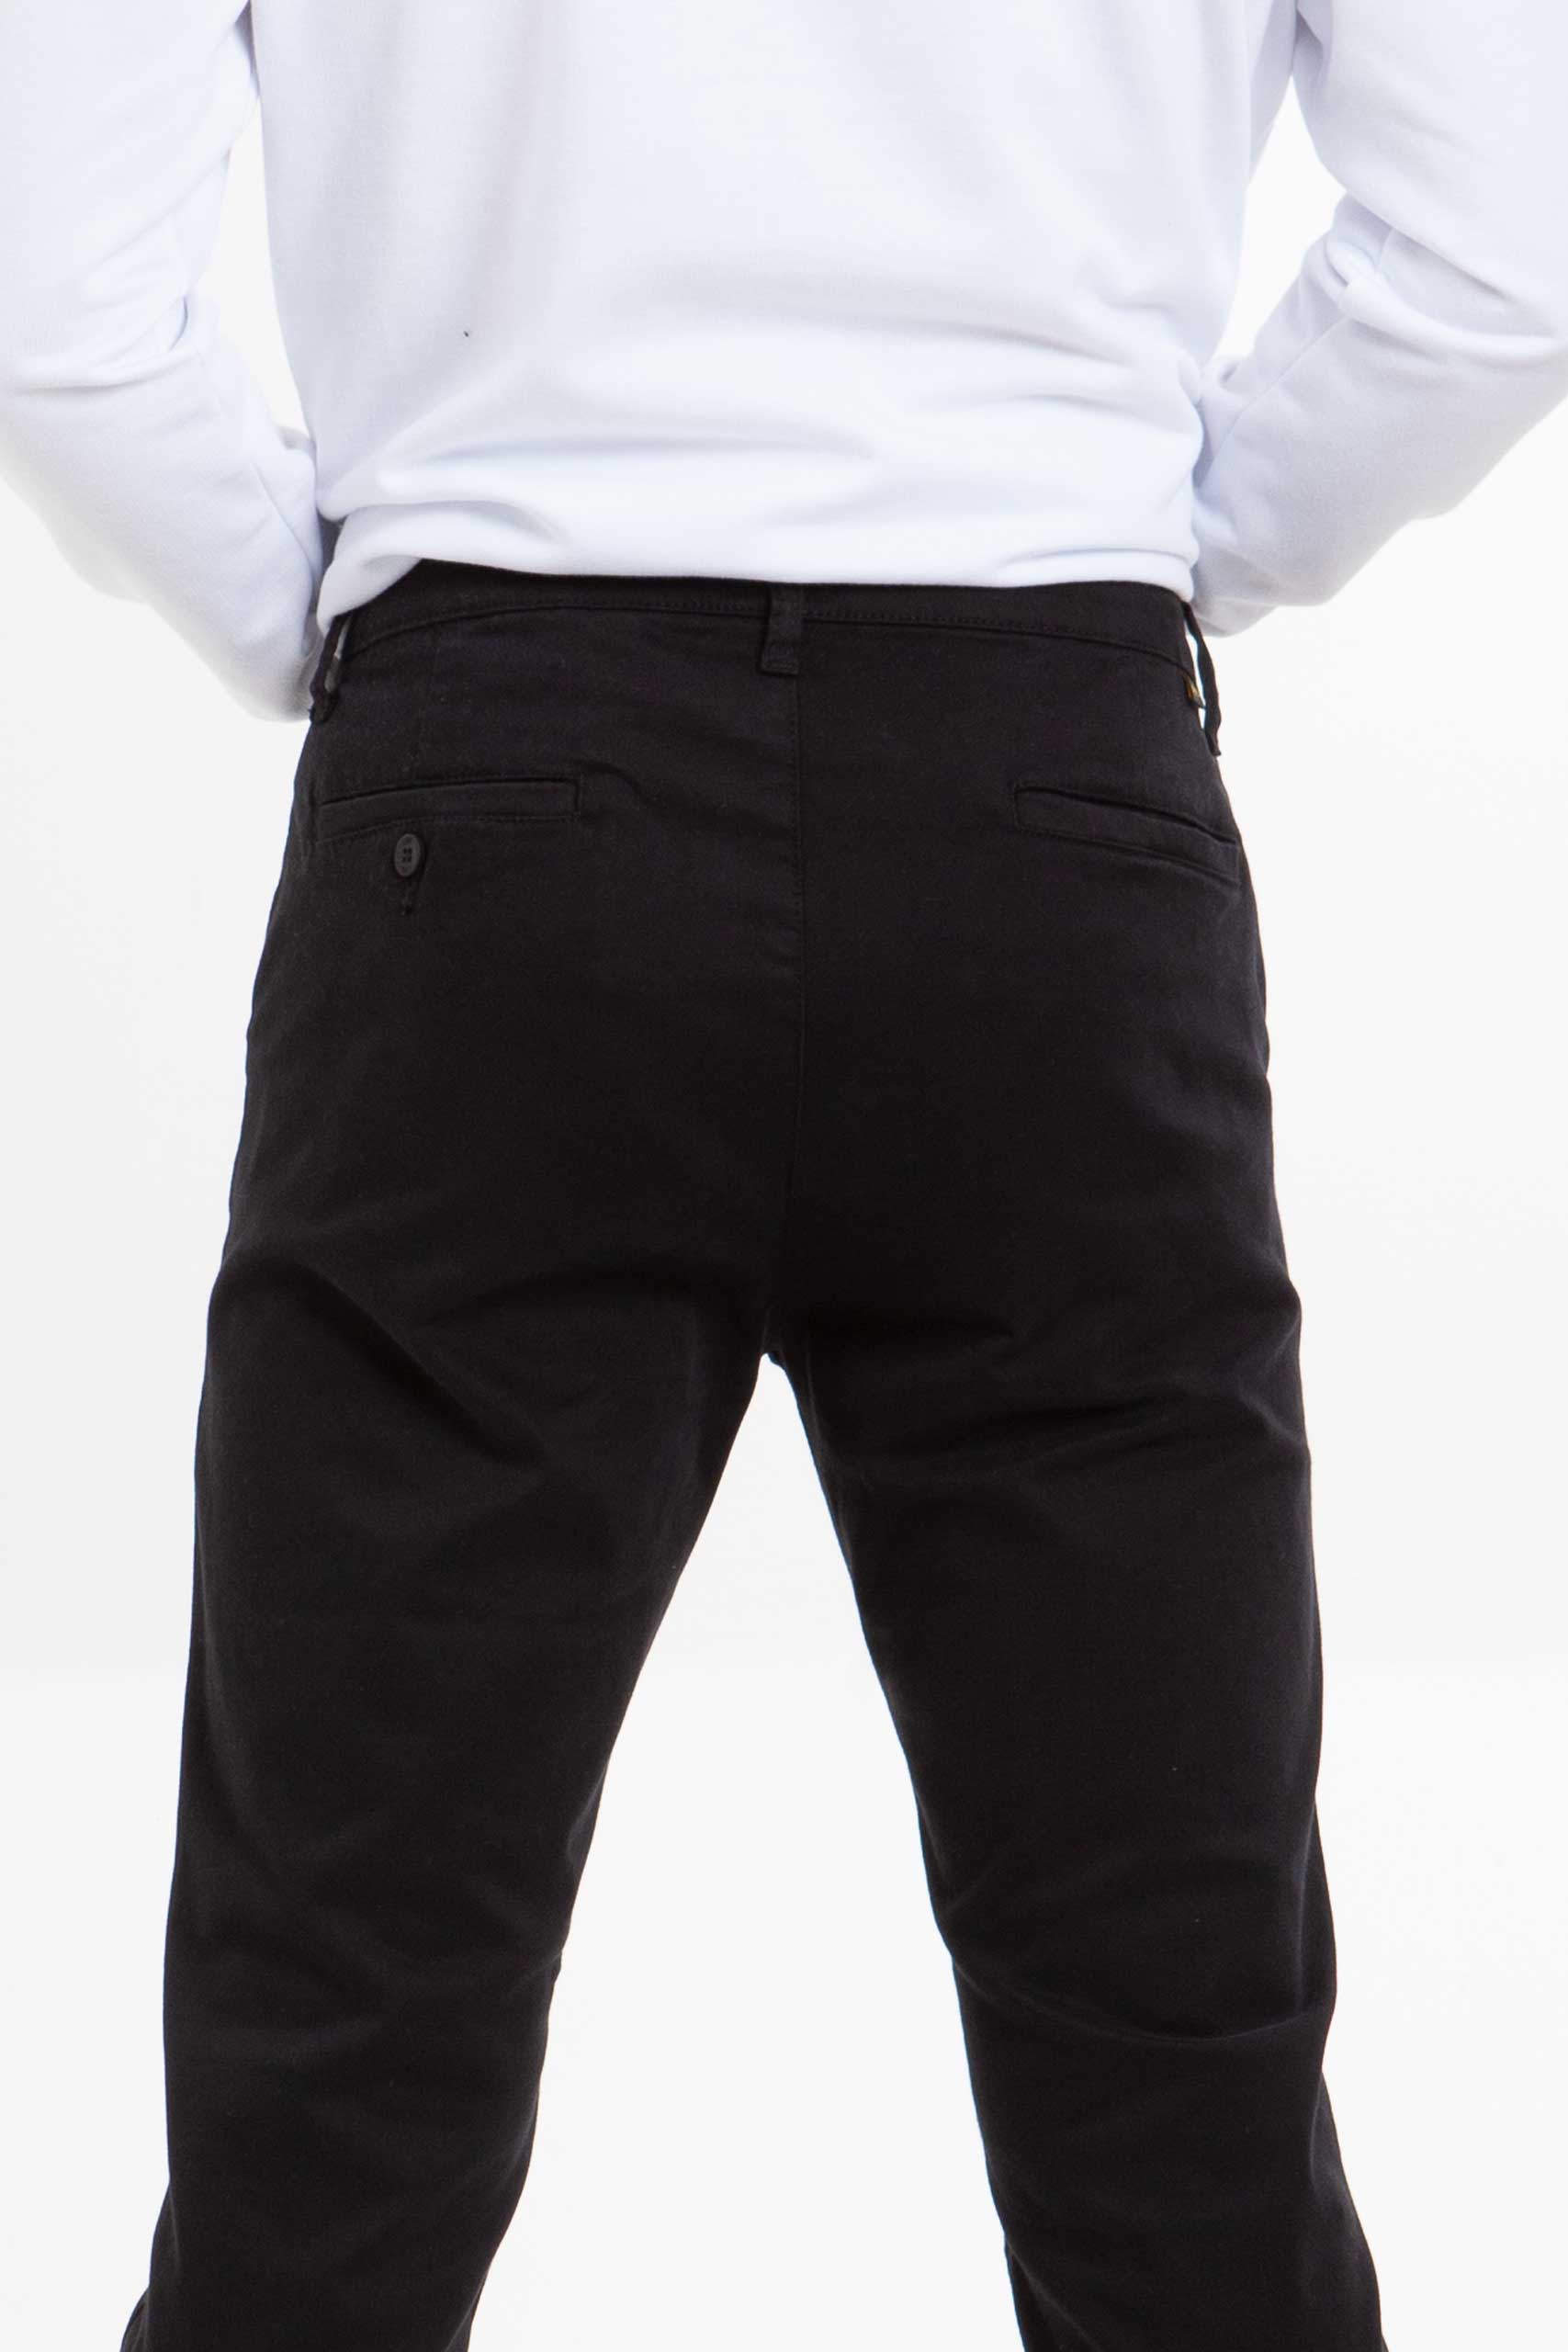 Vista posterior Pantalón chino Hombre negro marca Lee